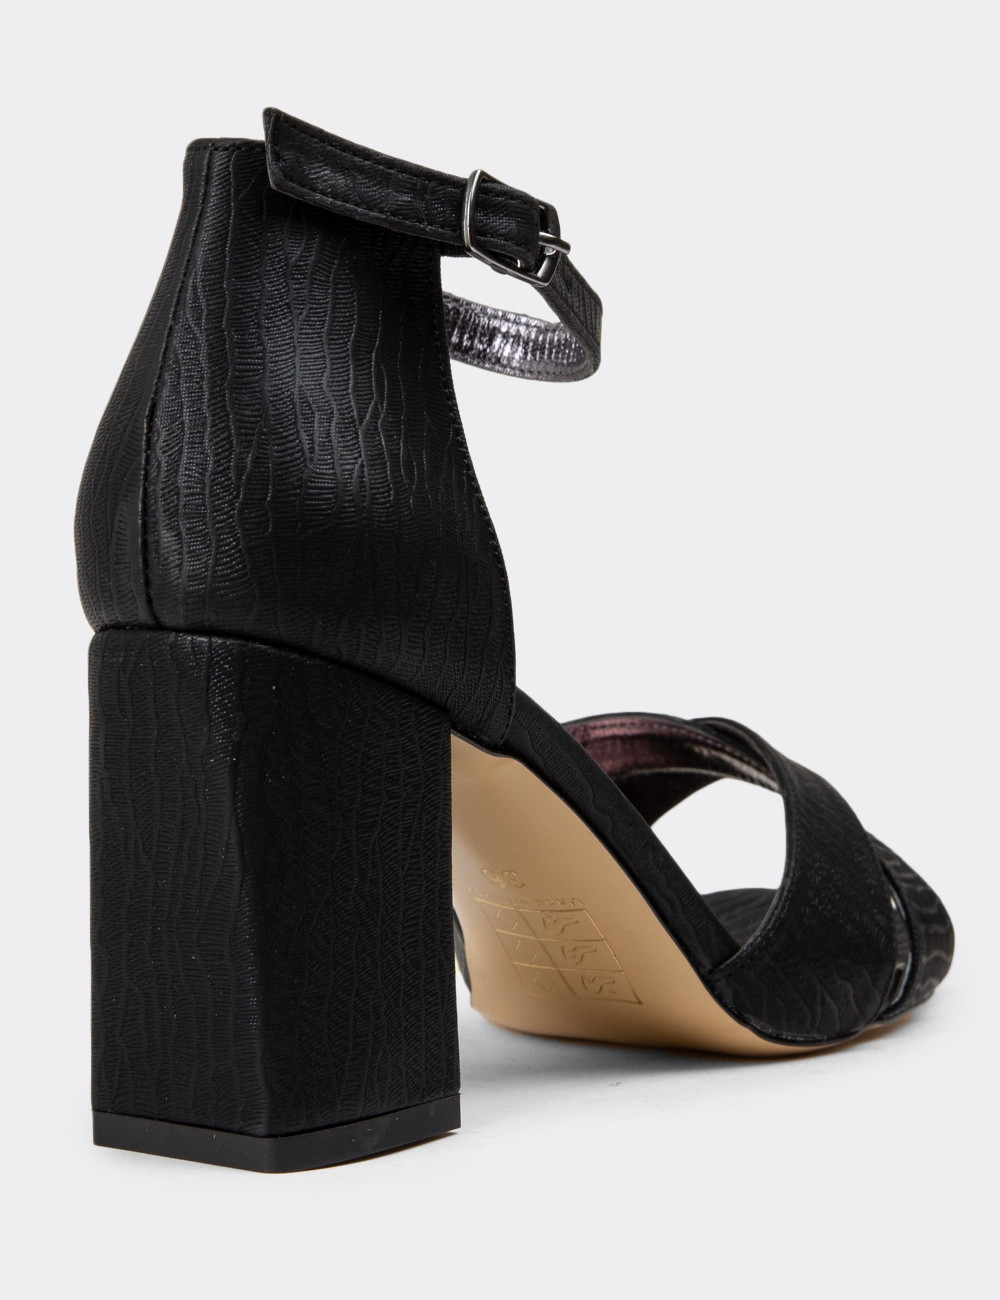 Siyah Kadın Topuklu Sandalet - K0821ZSYHM01